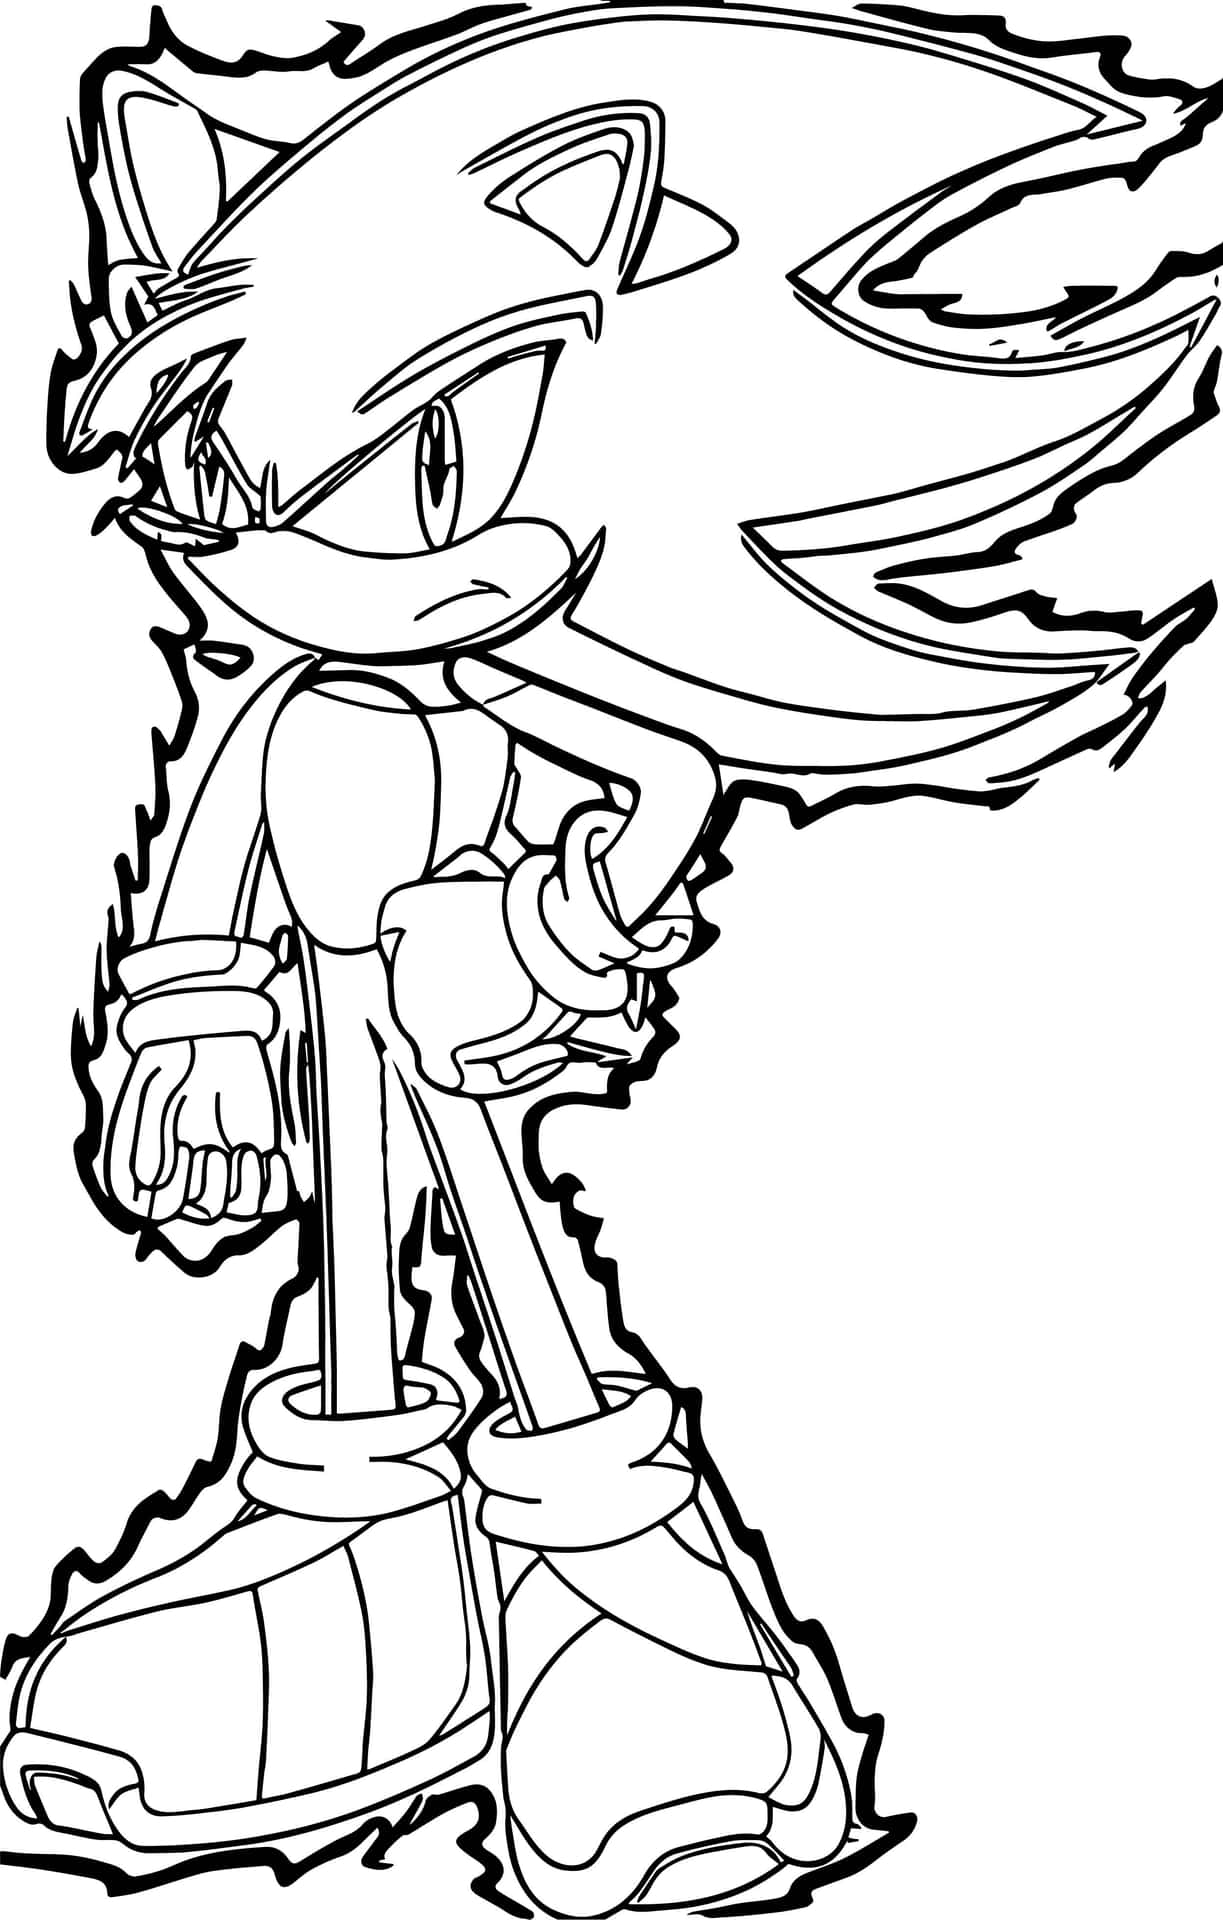 Imagende Sonic Para Colorear Súper Sonic